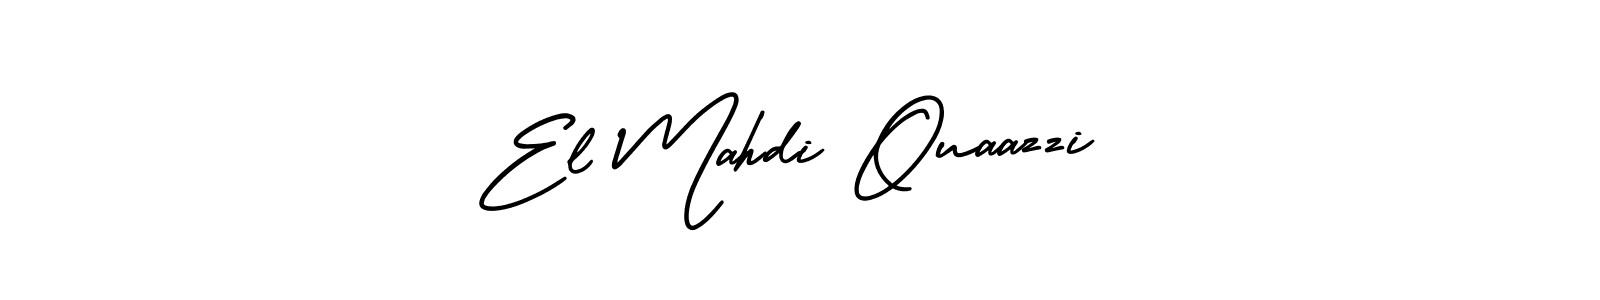 How to Draw El Mahdi Ouaazzi signature style? AmerikaSignatureDemo-Regular is a latest design signature styles for name El Mahdi Ouaazzi. El Mahdi Ouaazzi signature style 3 images and pictures png